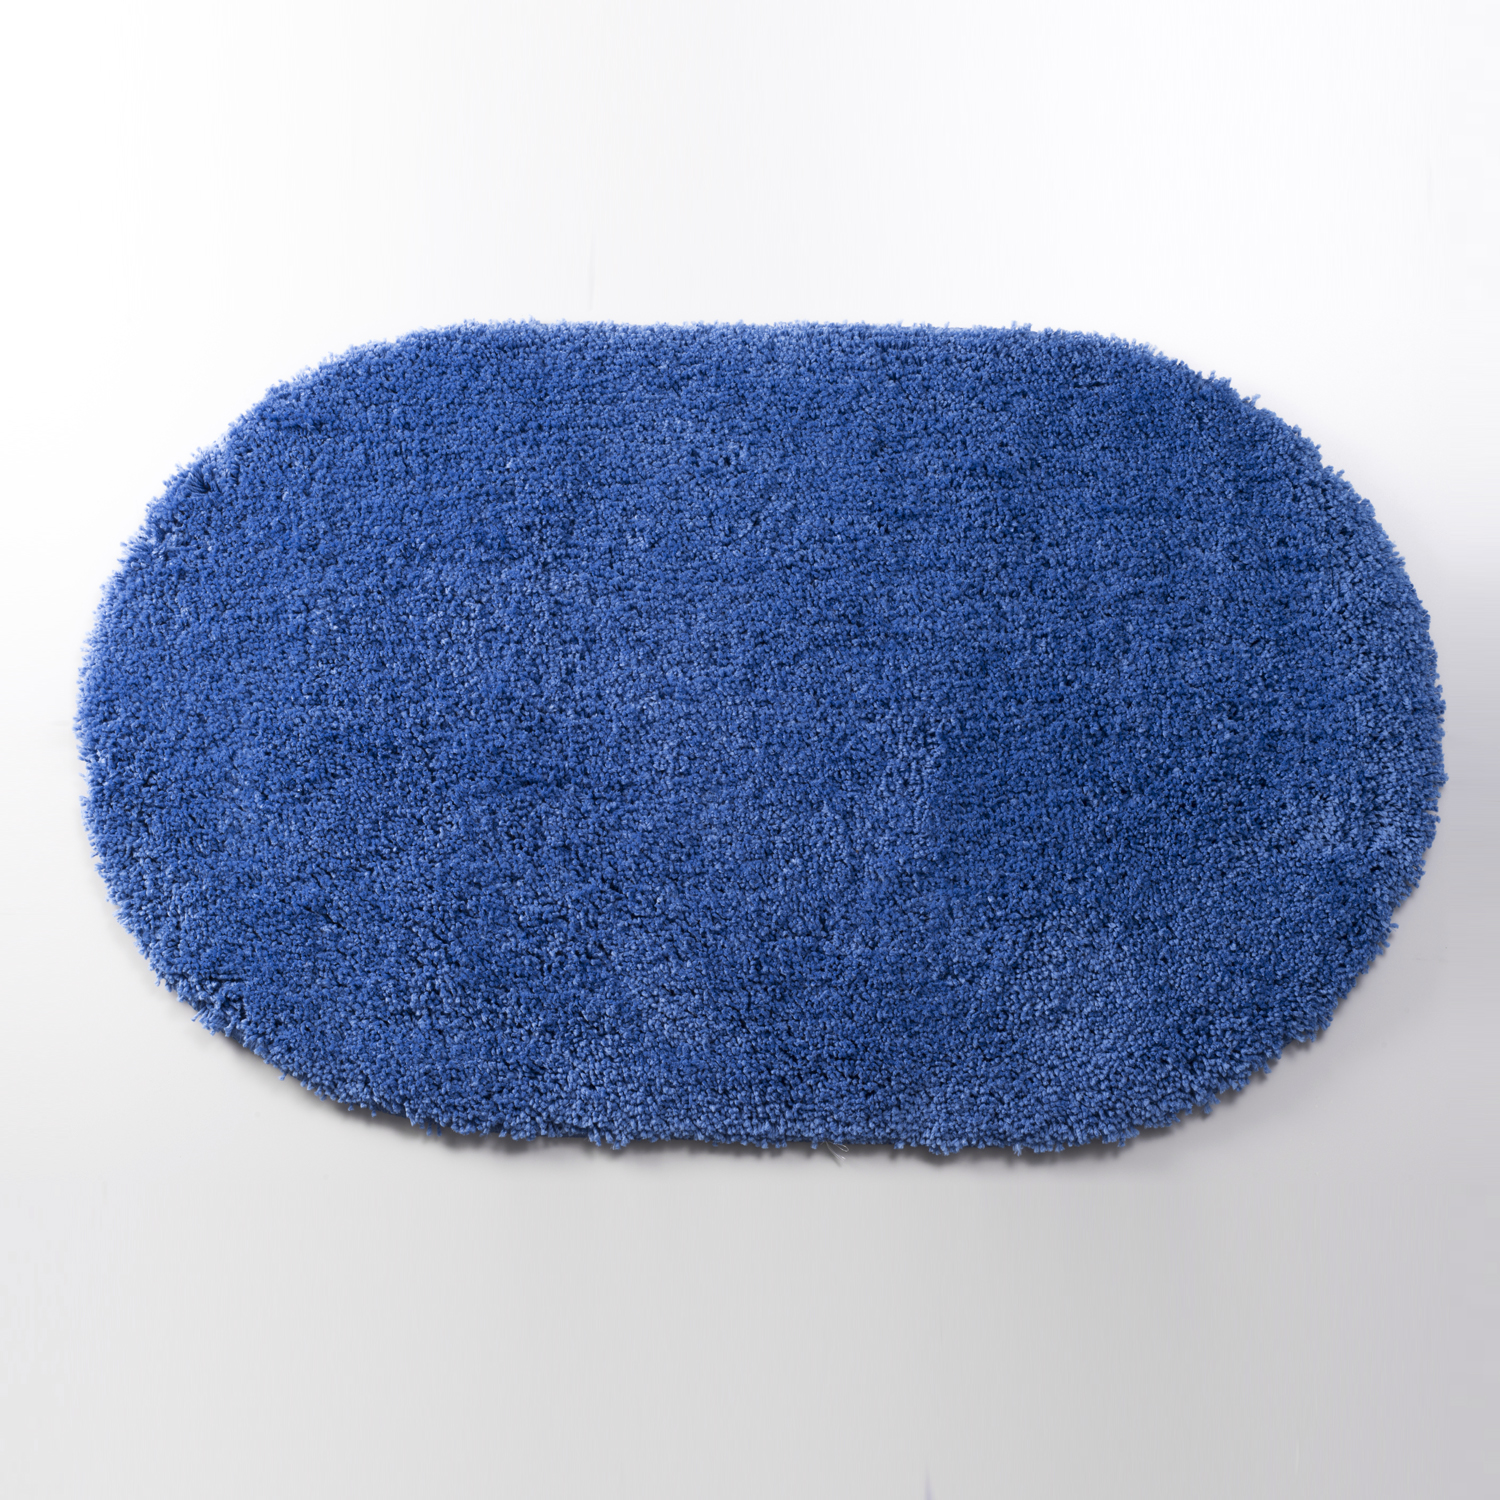 Коврик для ванной WasserKRAFT Dill синий 60х100 см коврик для ванной ridder grand prix синий голубой 55x85 см